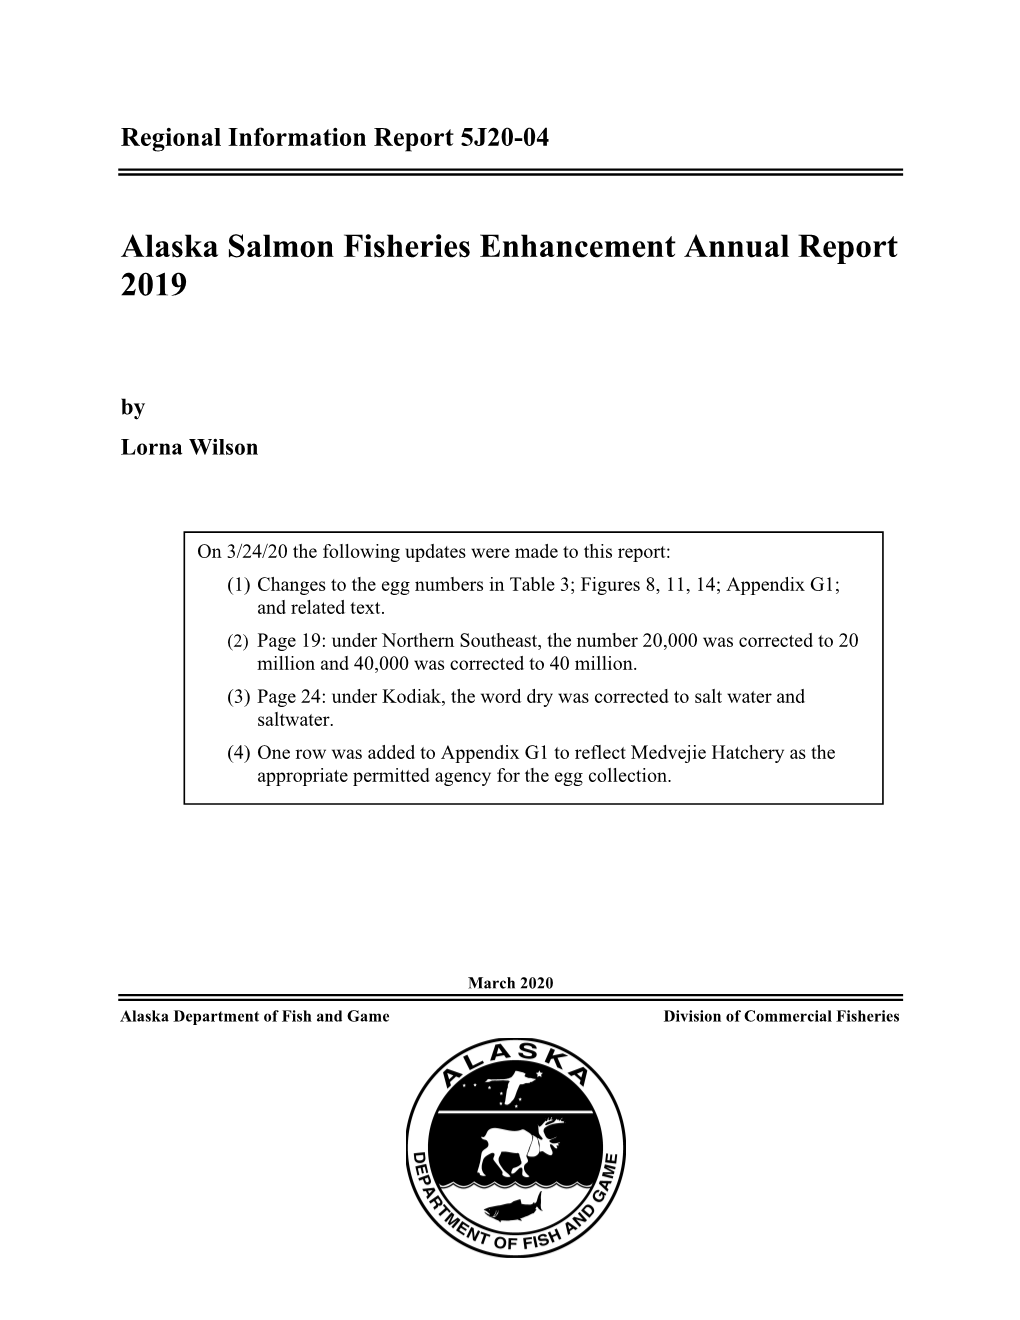 Alaska Salmon Fisheries Enhancement Annual Report 2019